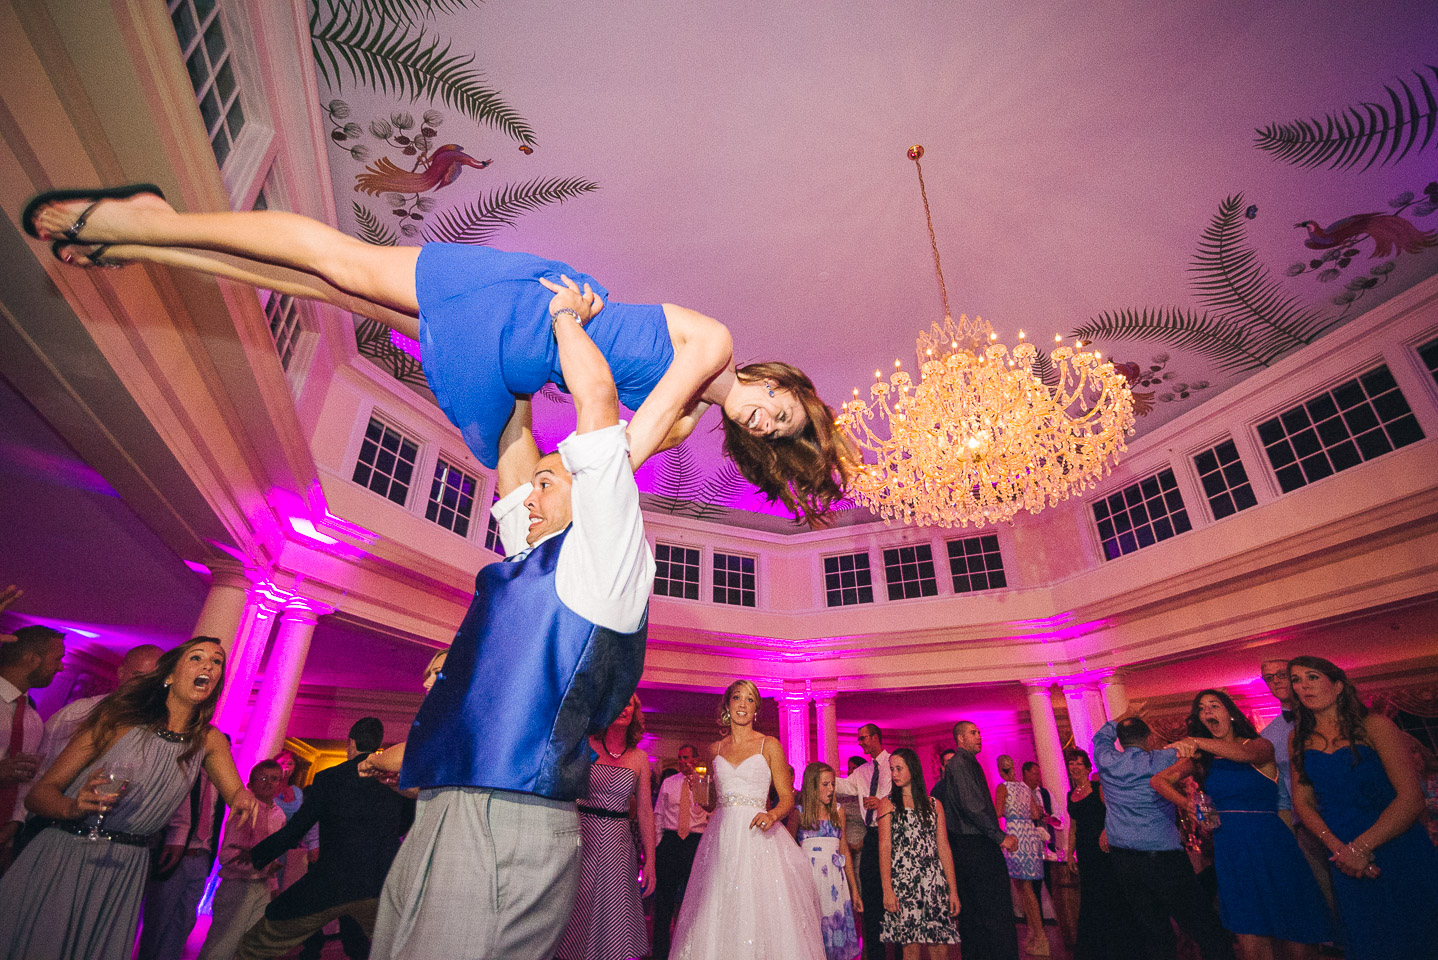 NH Wedding Photographer: dancing bridesmaid gets lifted